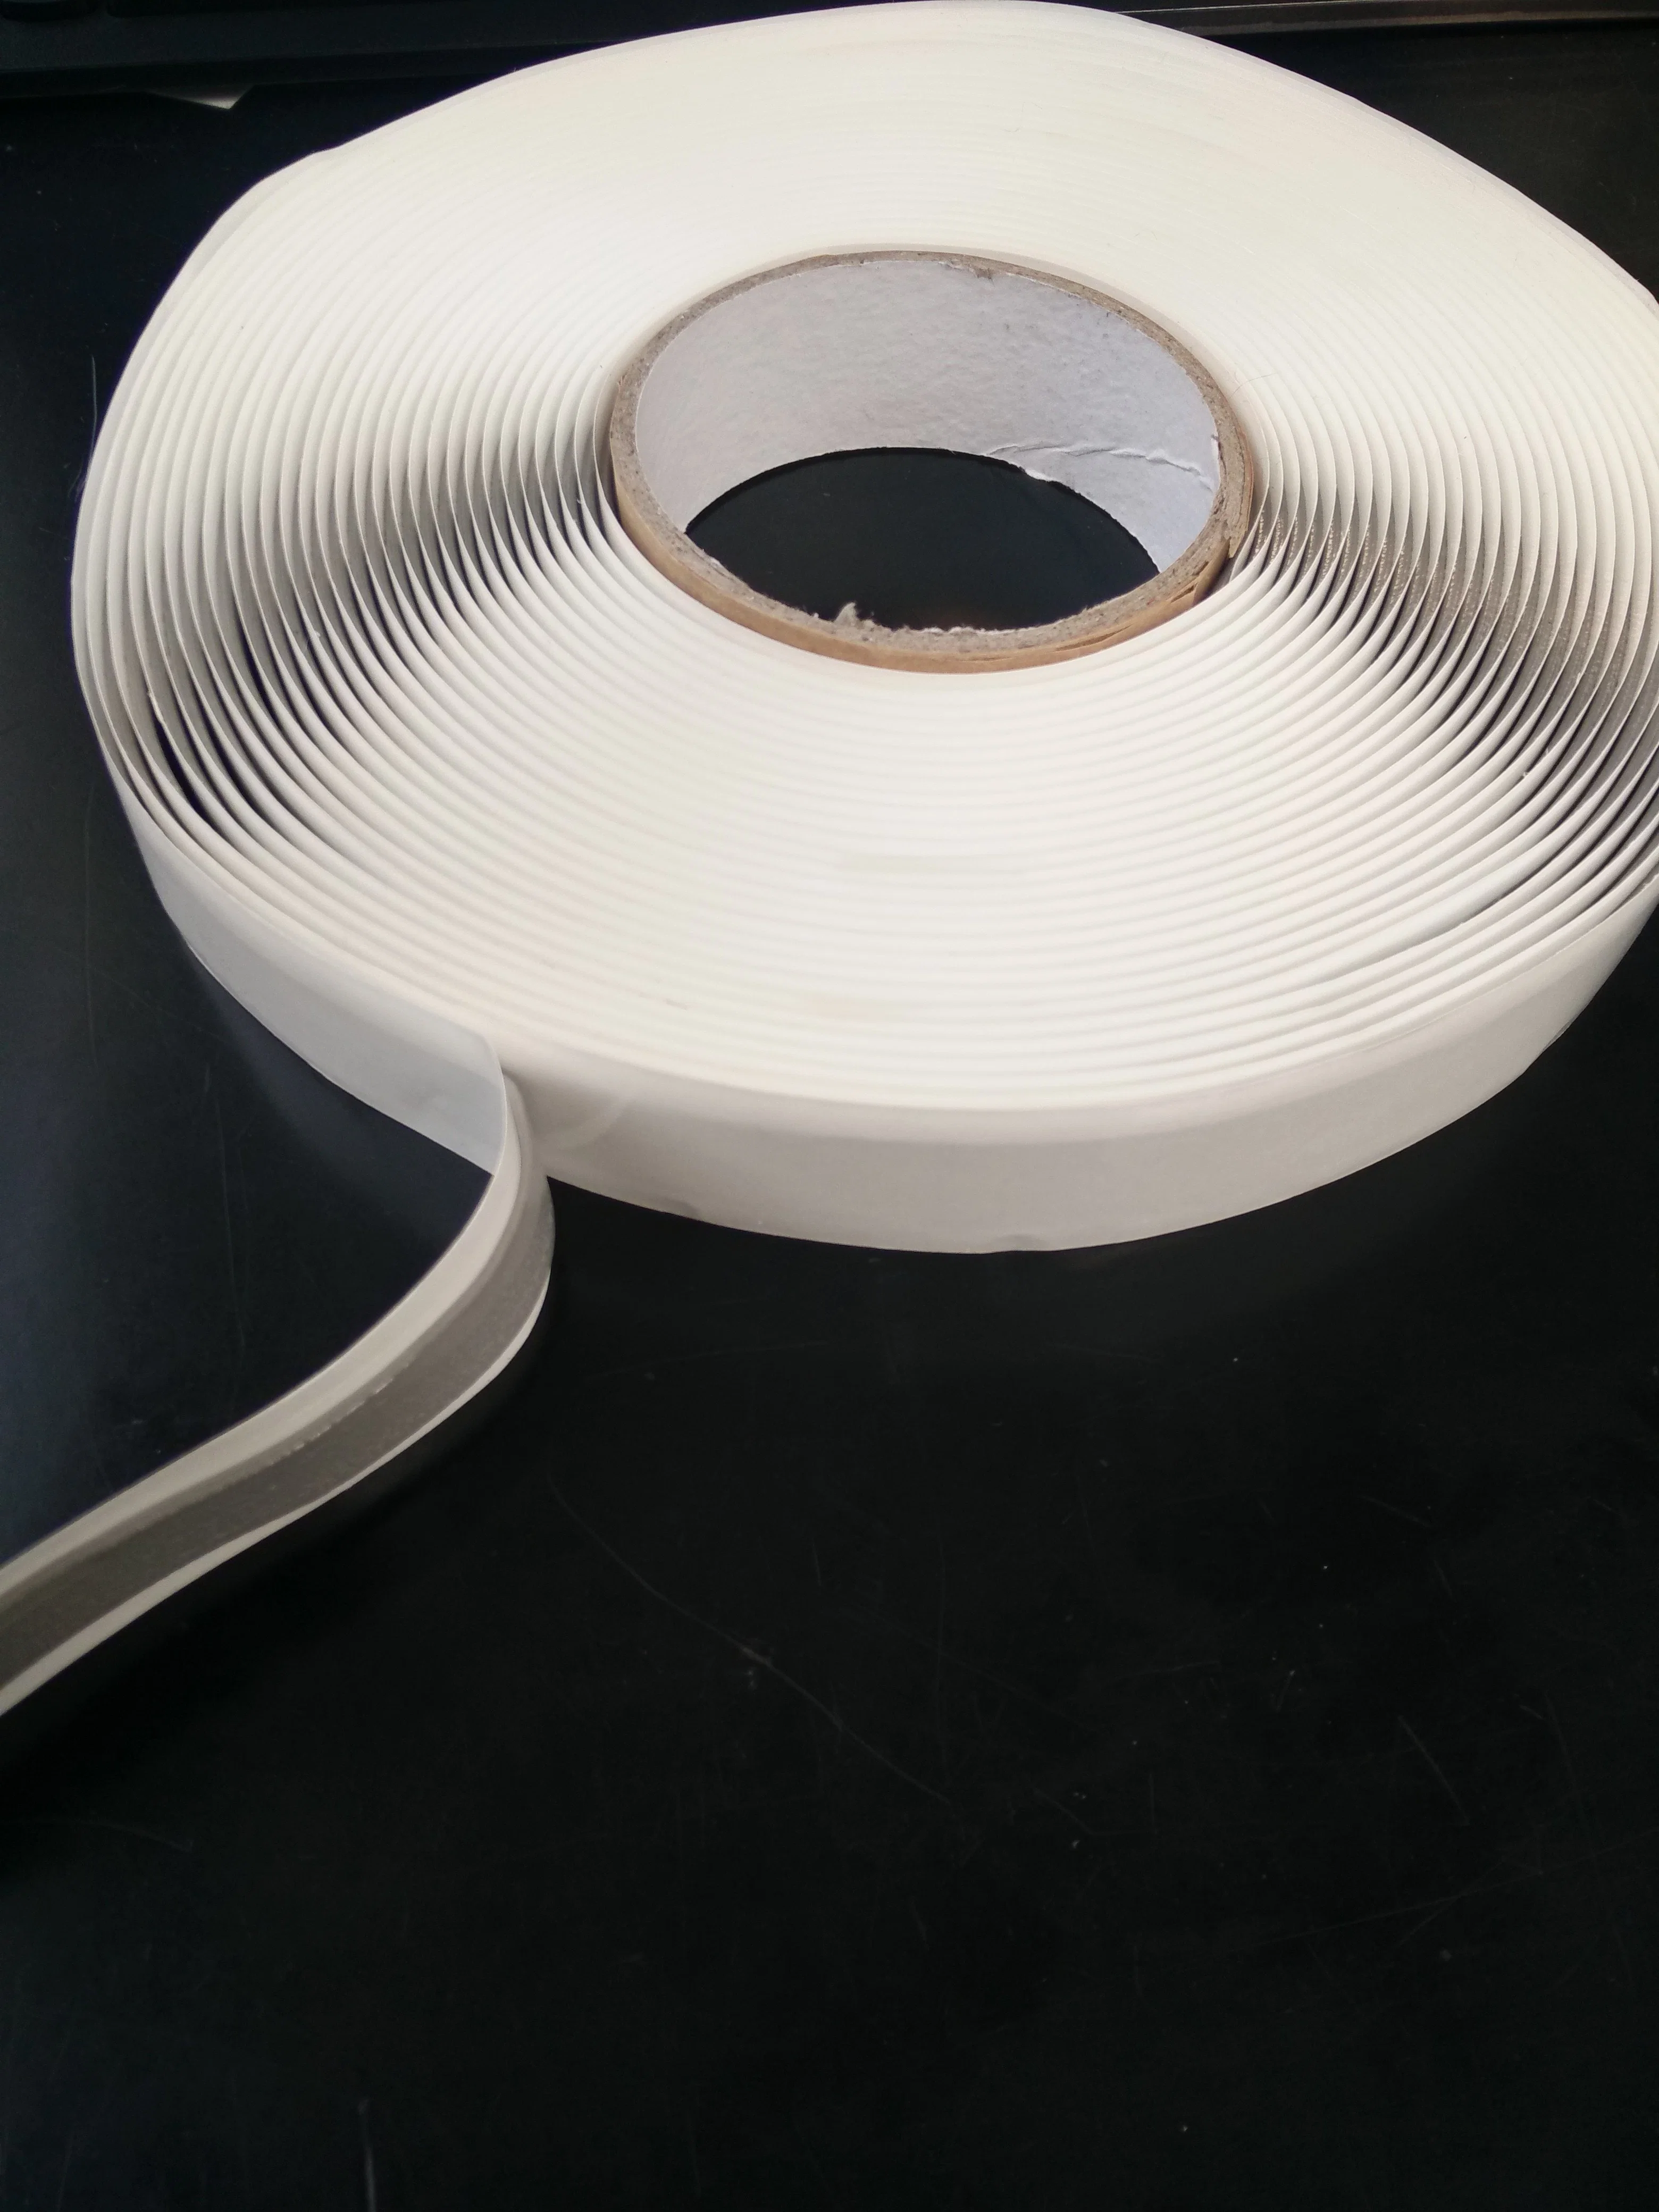 Automotive Use Waterproof Butyl Sealant Tape for Car Headlight Sealant Rubber Glue Retrofit Windshield Seal Strip Trim